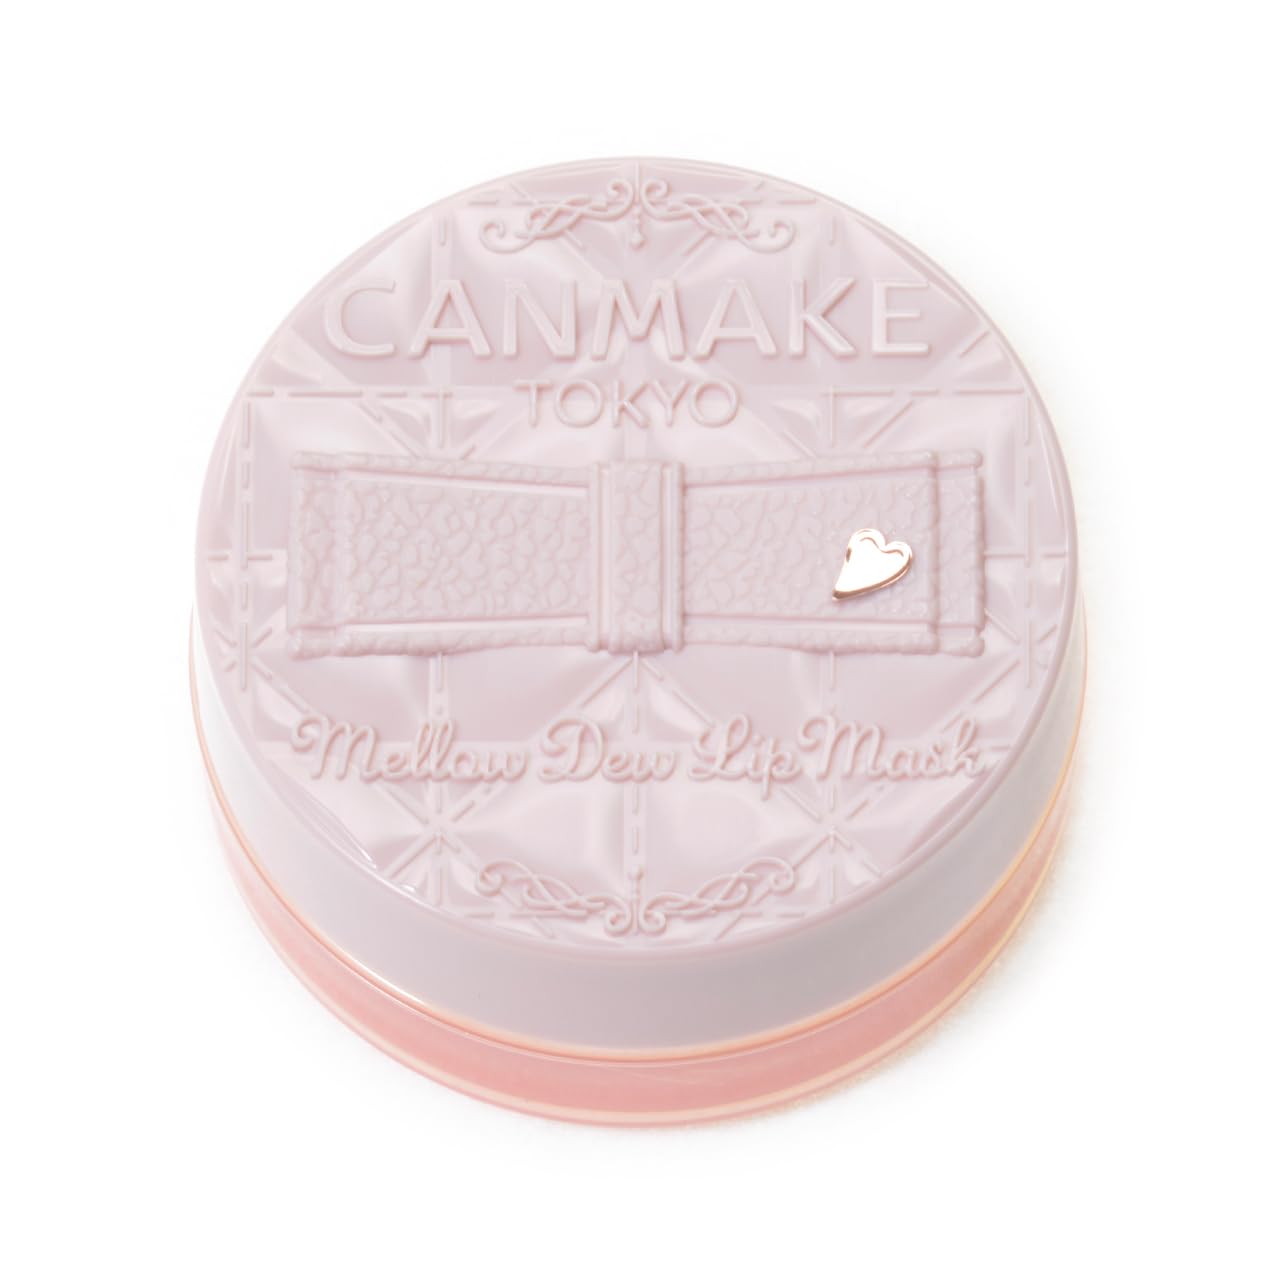 Canmake Mellow Dew Lip Mask 4.0g - Clear Pink Intensive Moisturizing Care - YOYO JAPAN